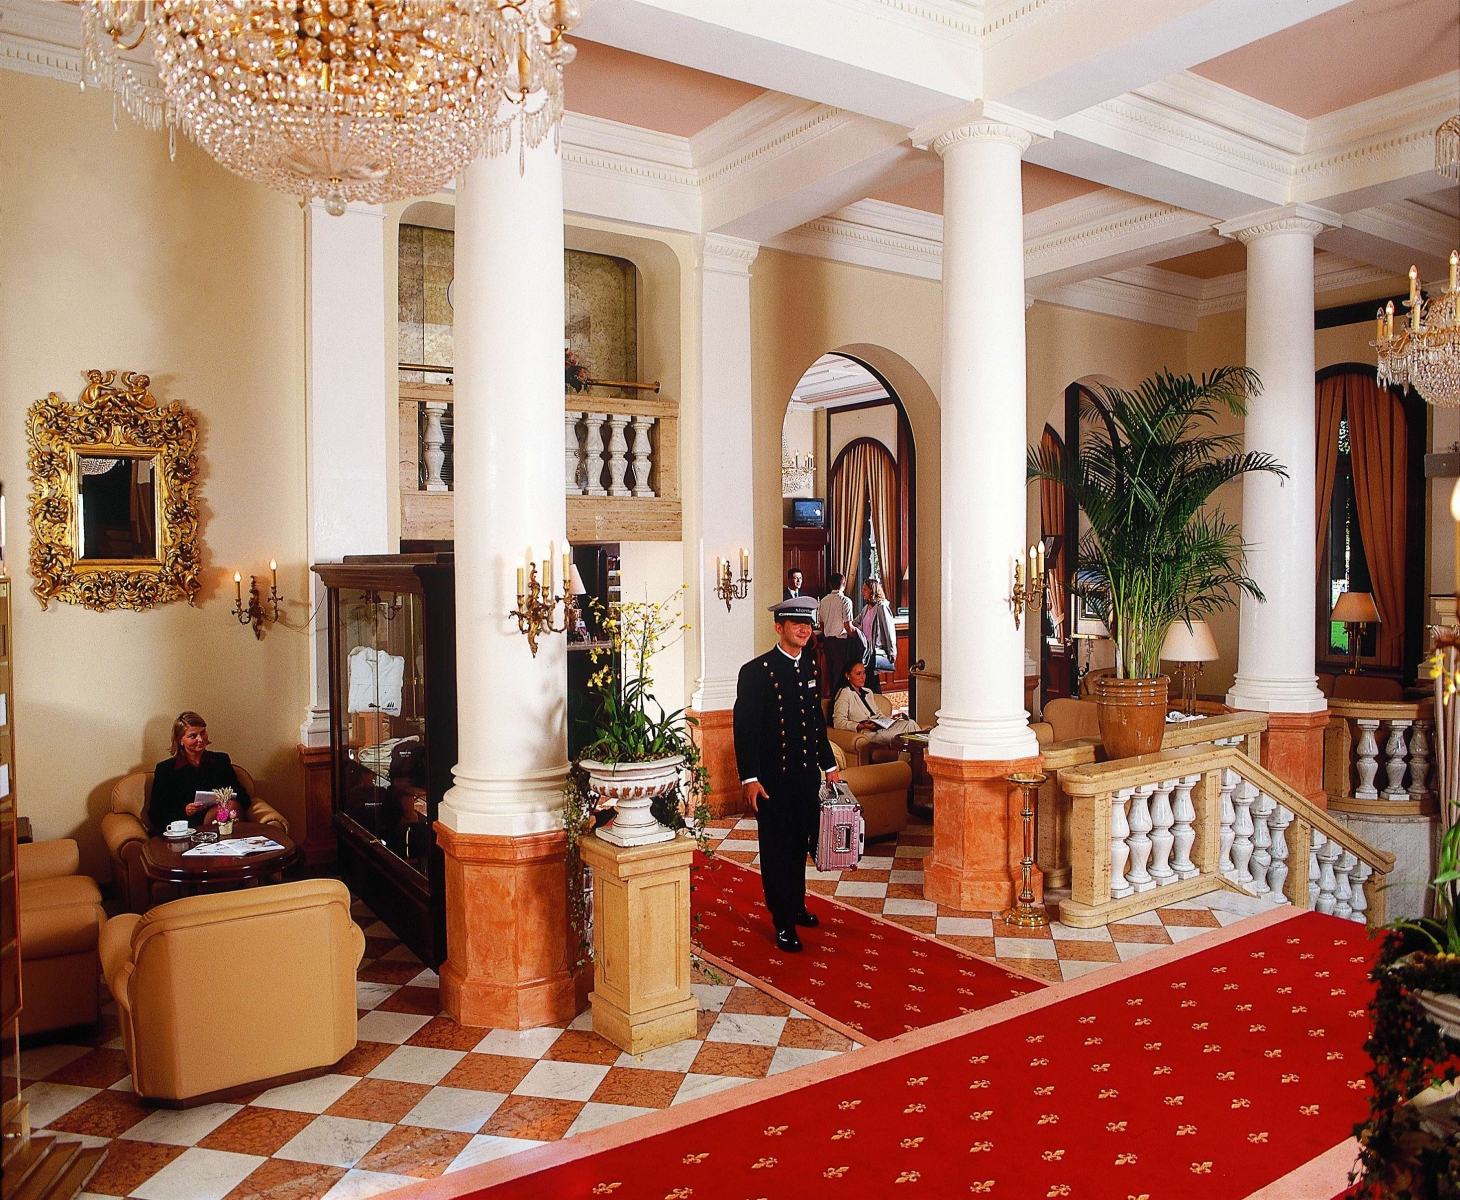 Maritim Hotel Mannheim <br/>63.34 ew <br/> <a href='http://vakantieoplossing.nl/outpage/?id=f06be65113343a91539d9203c235b91d' target='_blank'>View Details</a>